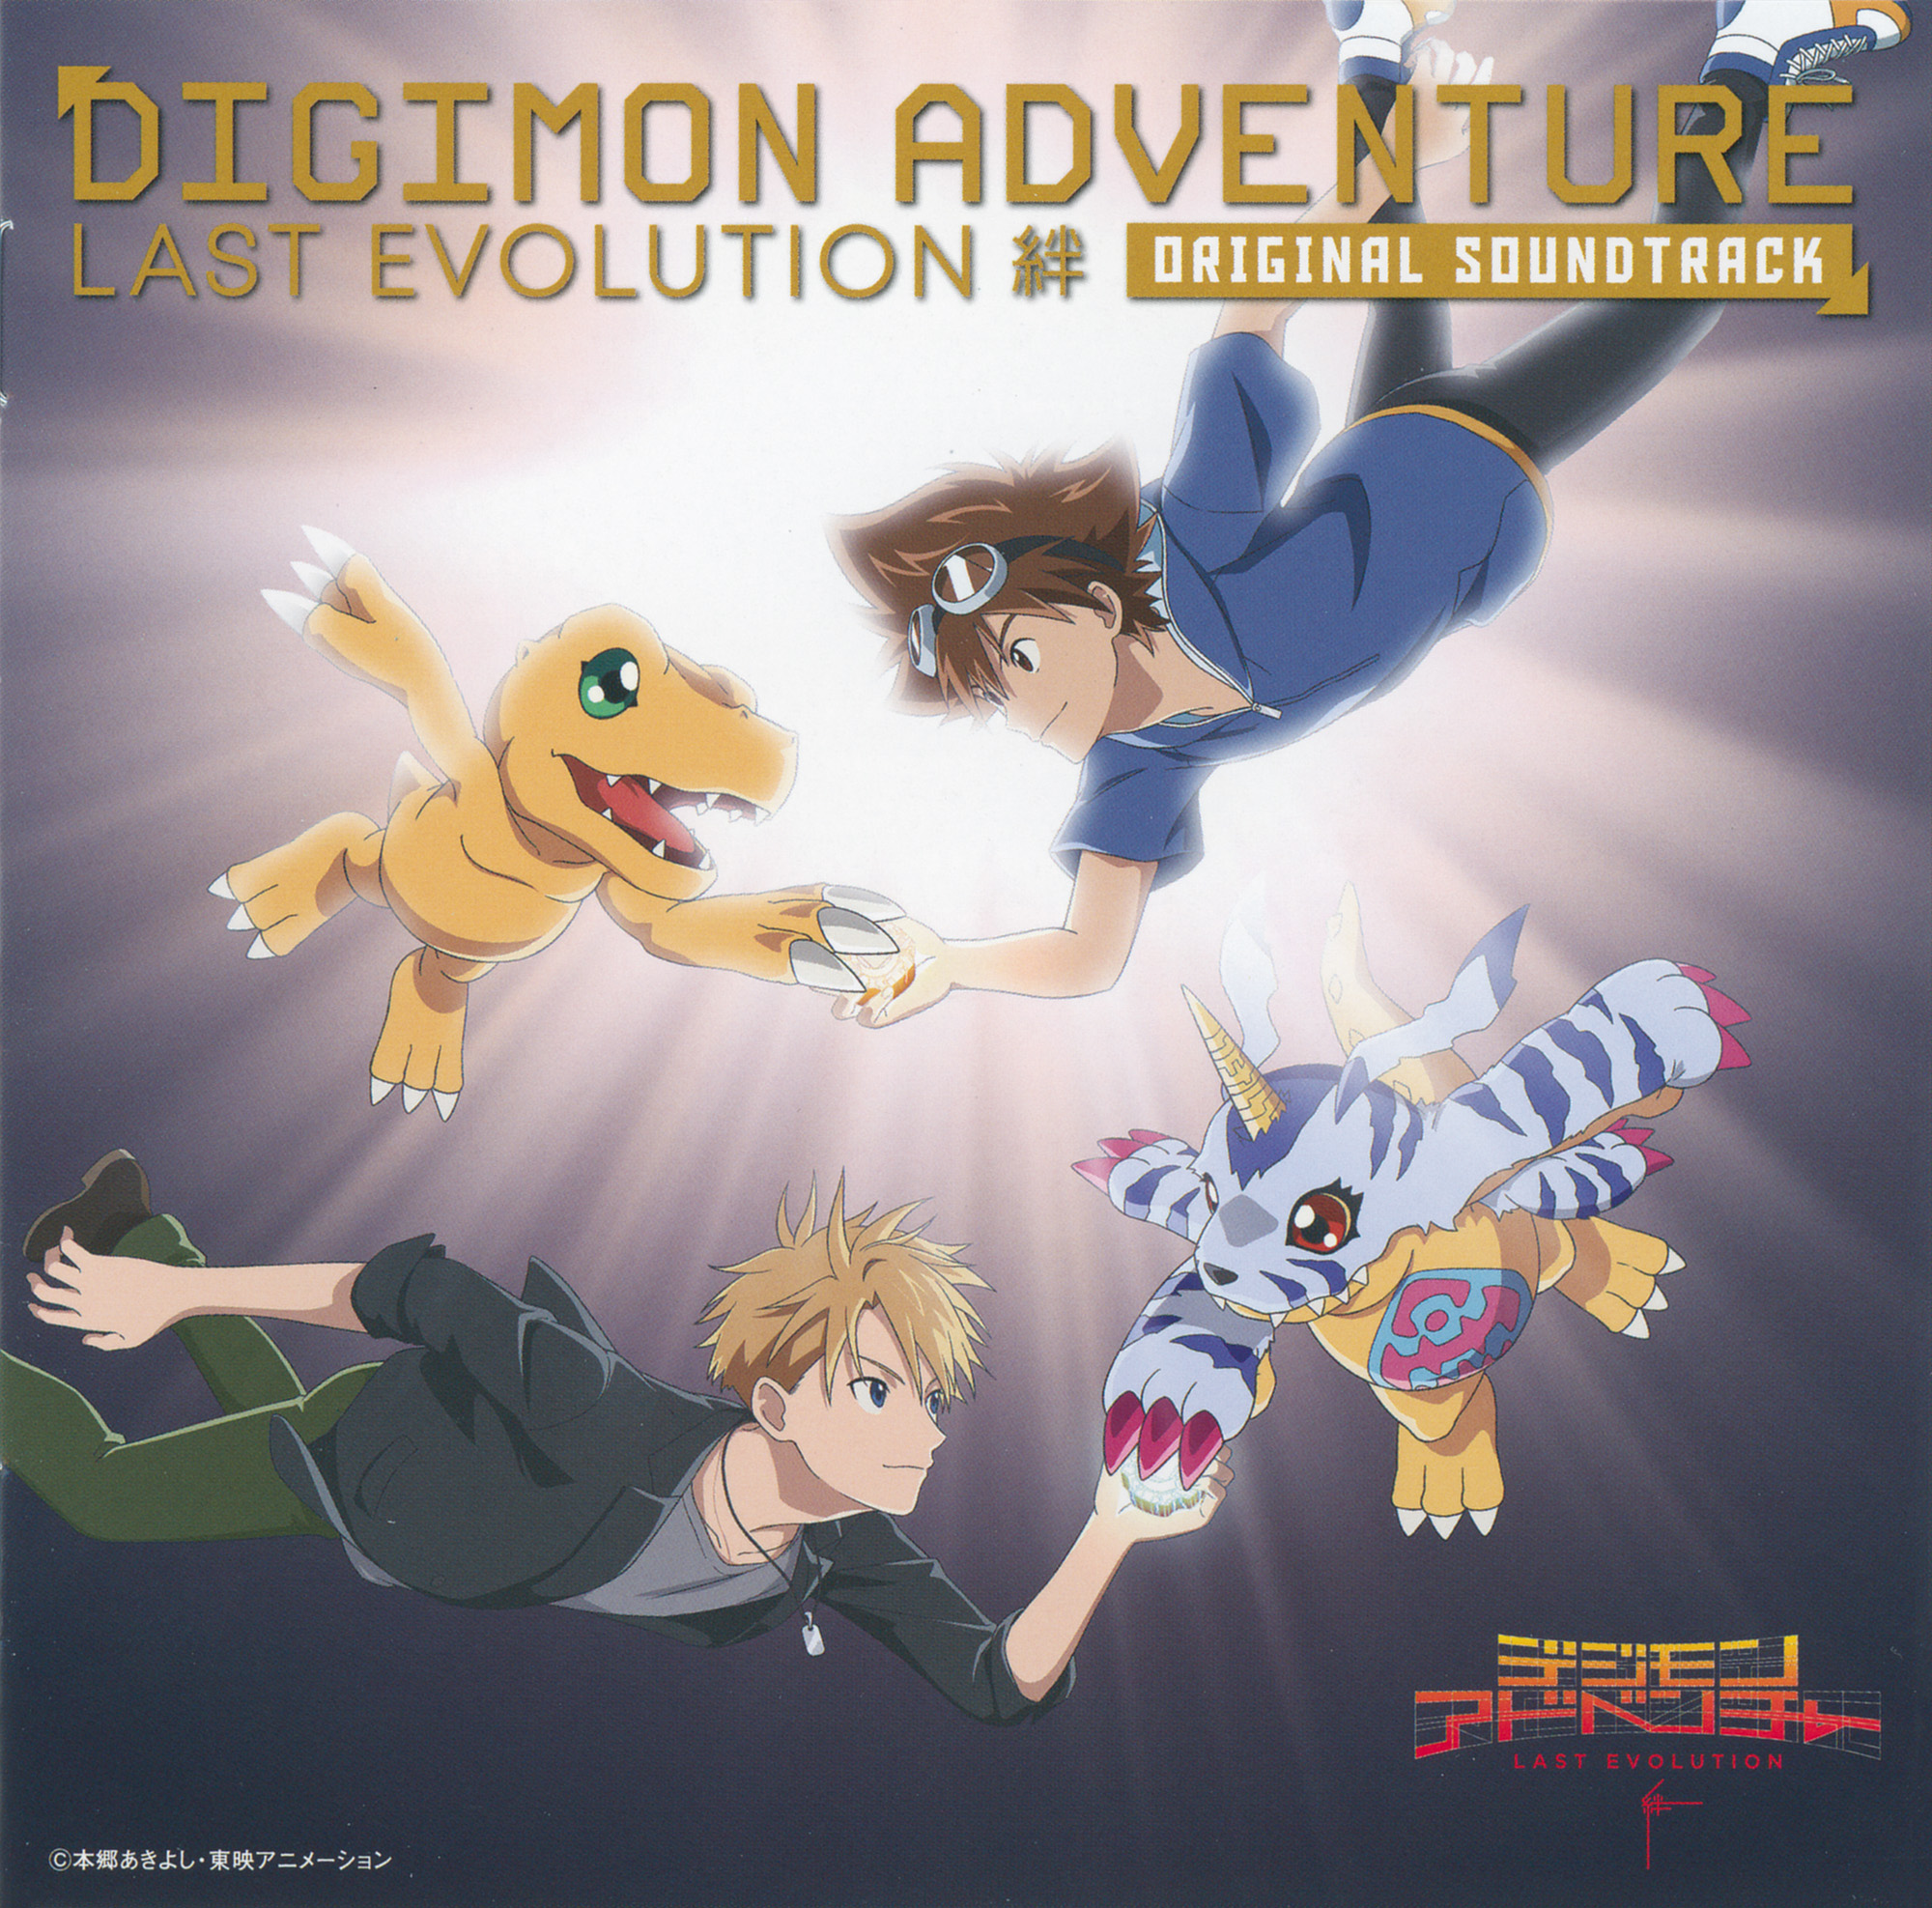 A Final Farewell? Digimon Adventure: Last Evolution Kizuna - Anime